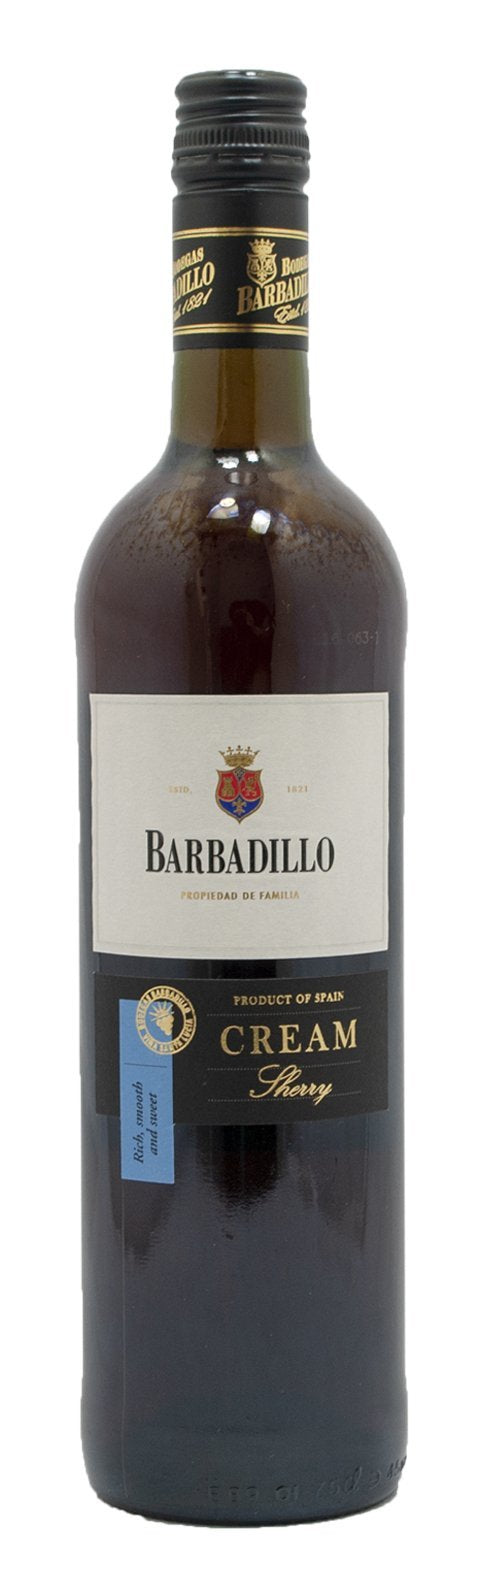 Barbadillo Cream Sherry, Sanlucar de Barrameda, Spain